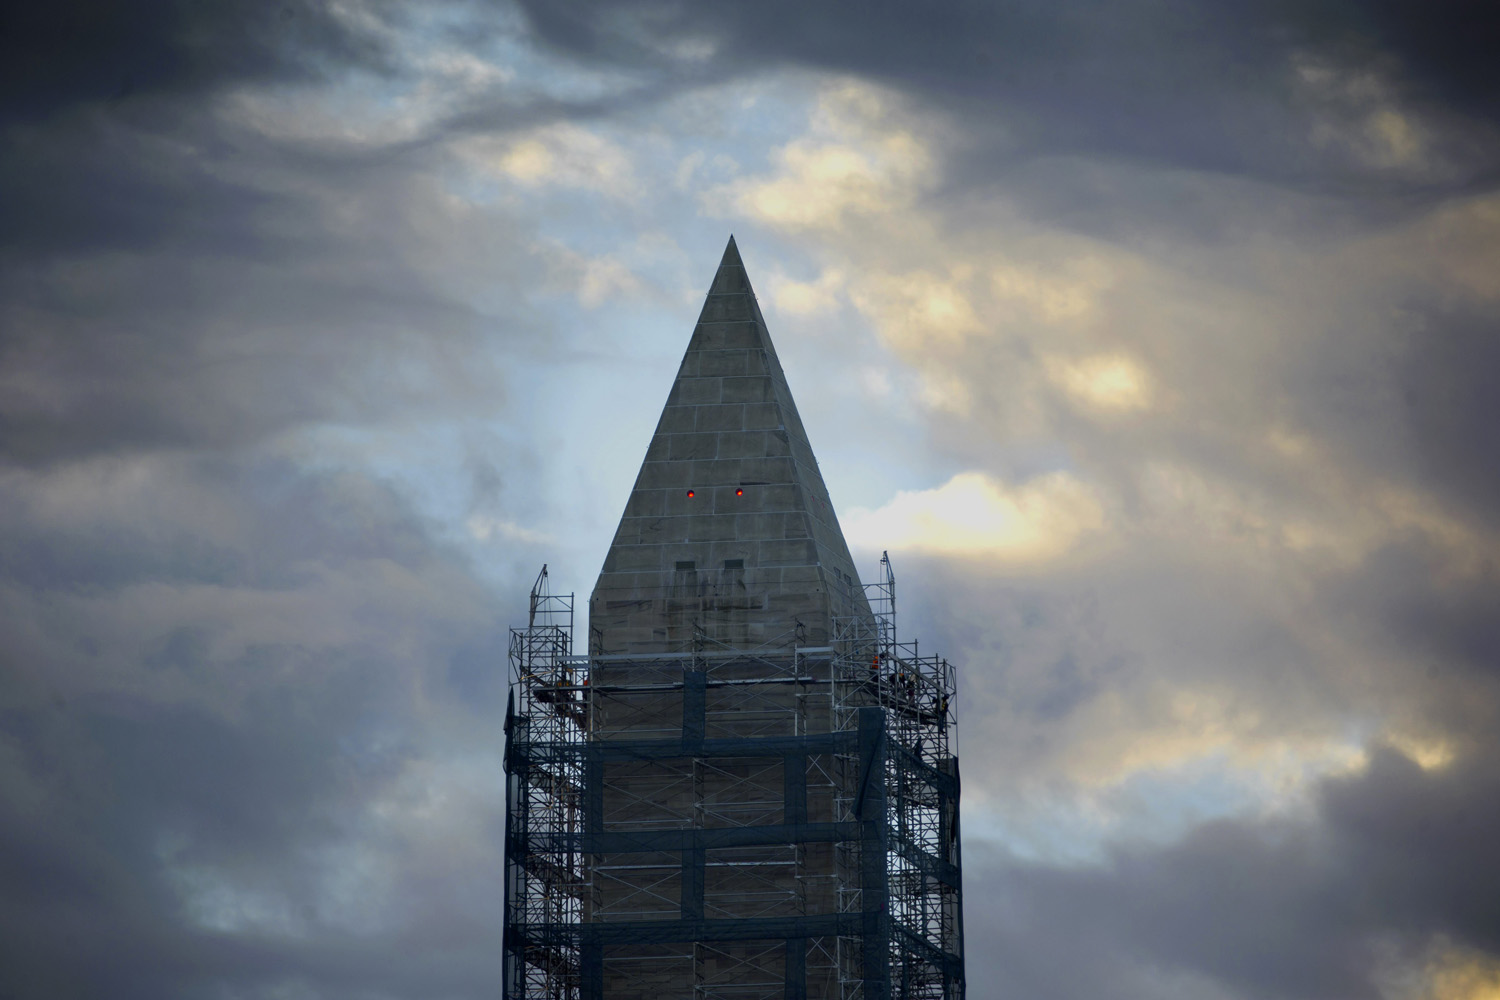 Nov. 18, 2013. Work crews continue removing the scaffolding surrounding the Washington Monument in Washington.